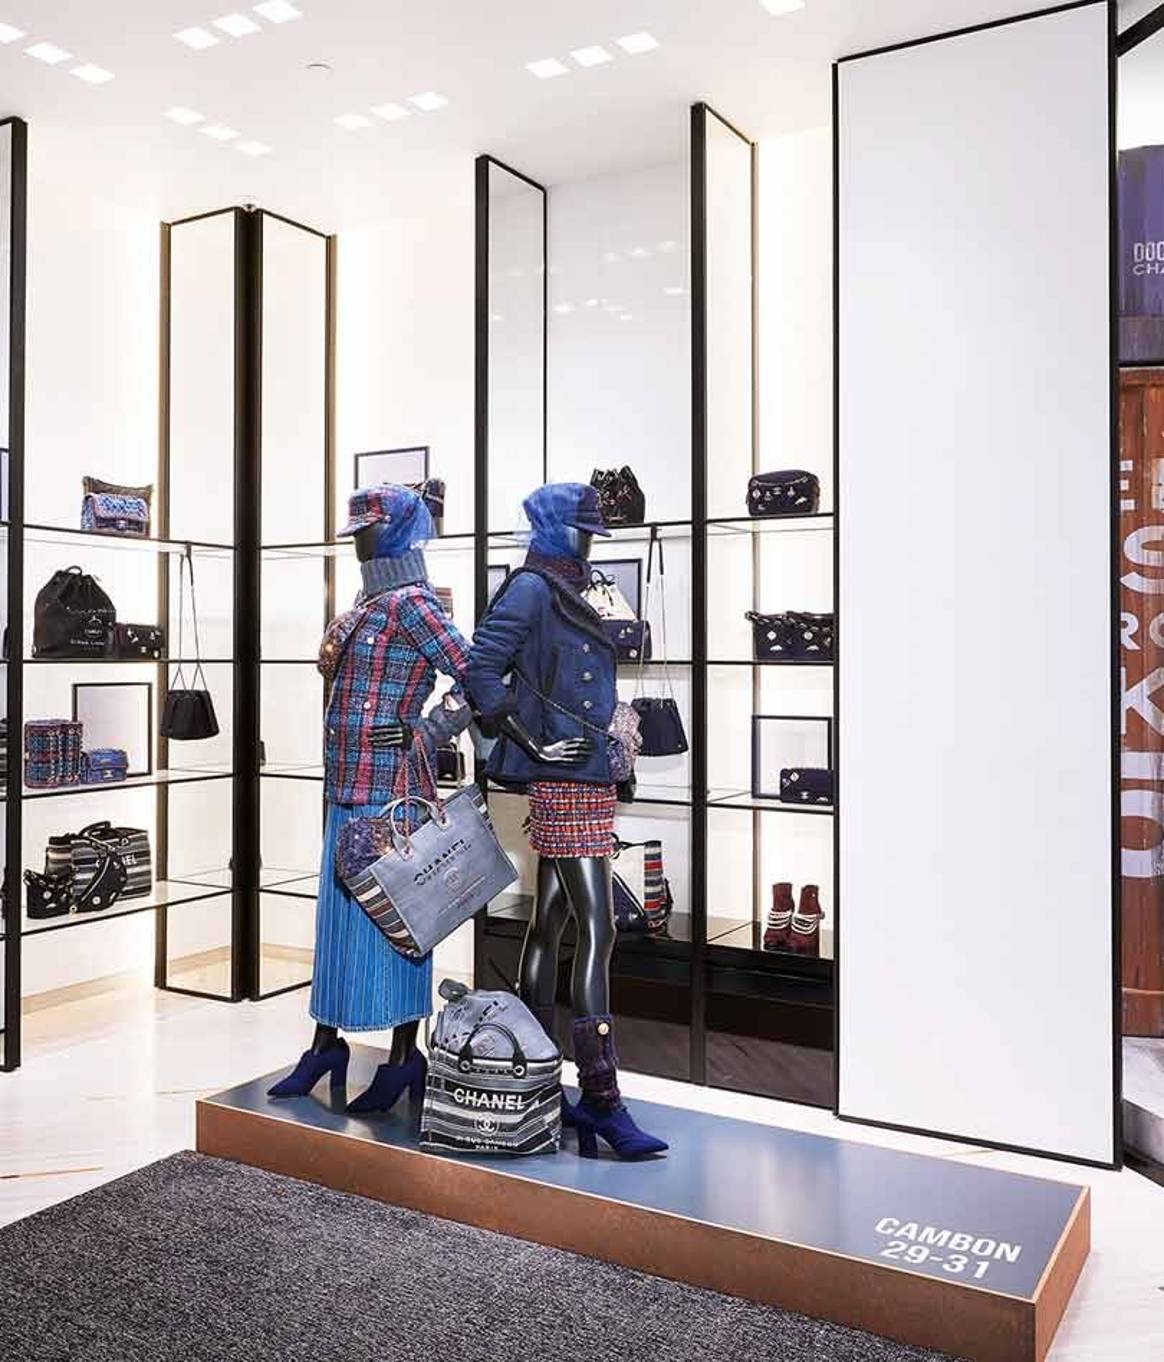 Открылся обновленный бутик Chanel в ТЦ "Крокус Сити Молл" - фото